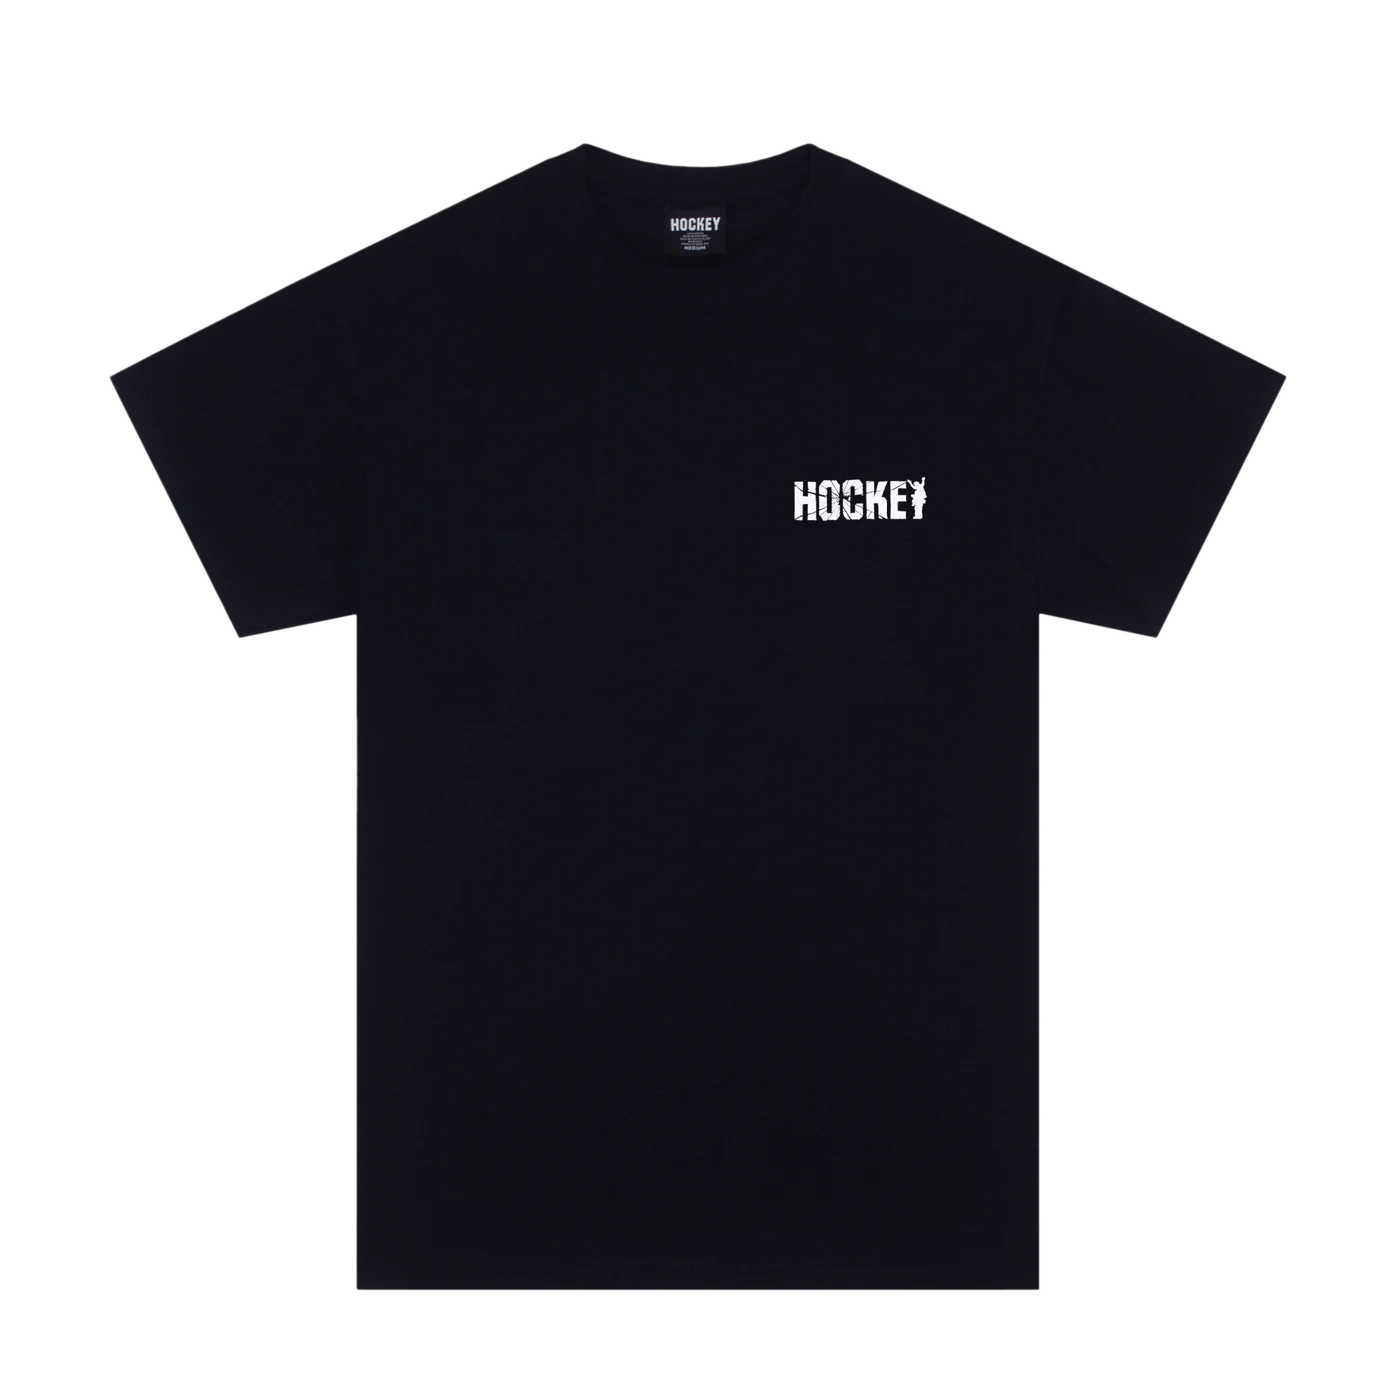 Hockey City Limits T-Shirt in Black - Goodnews Skateshop